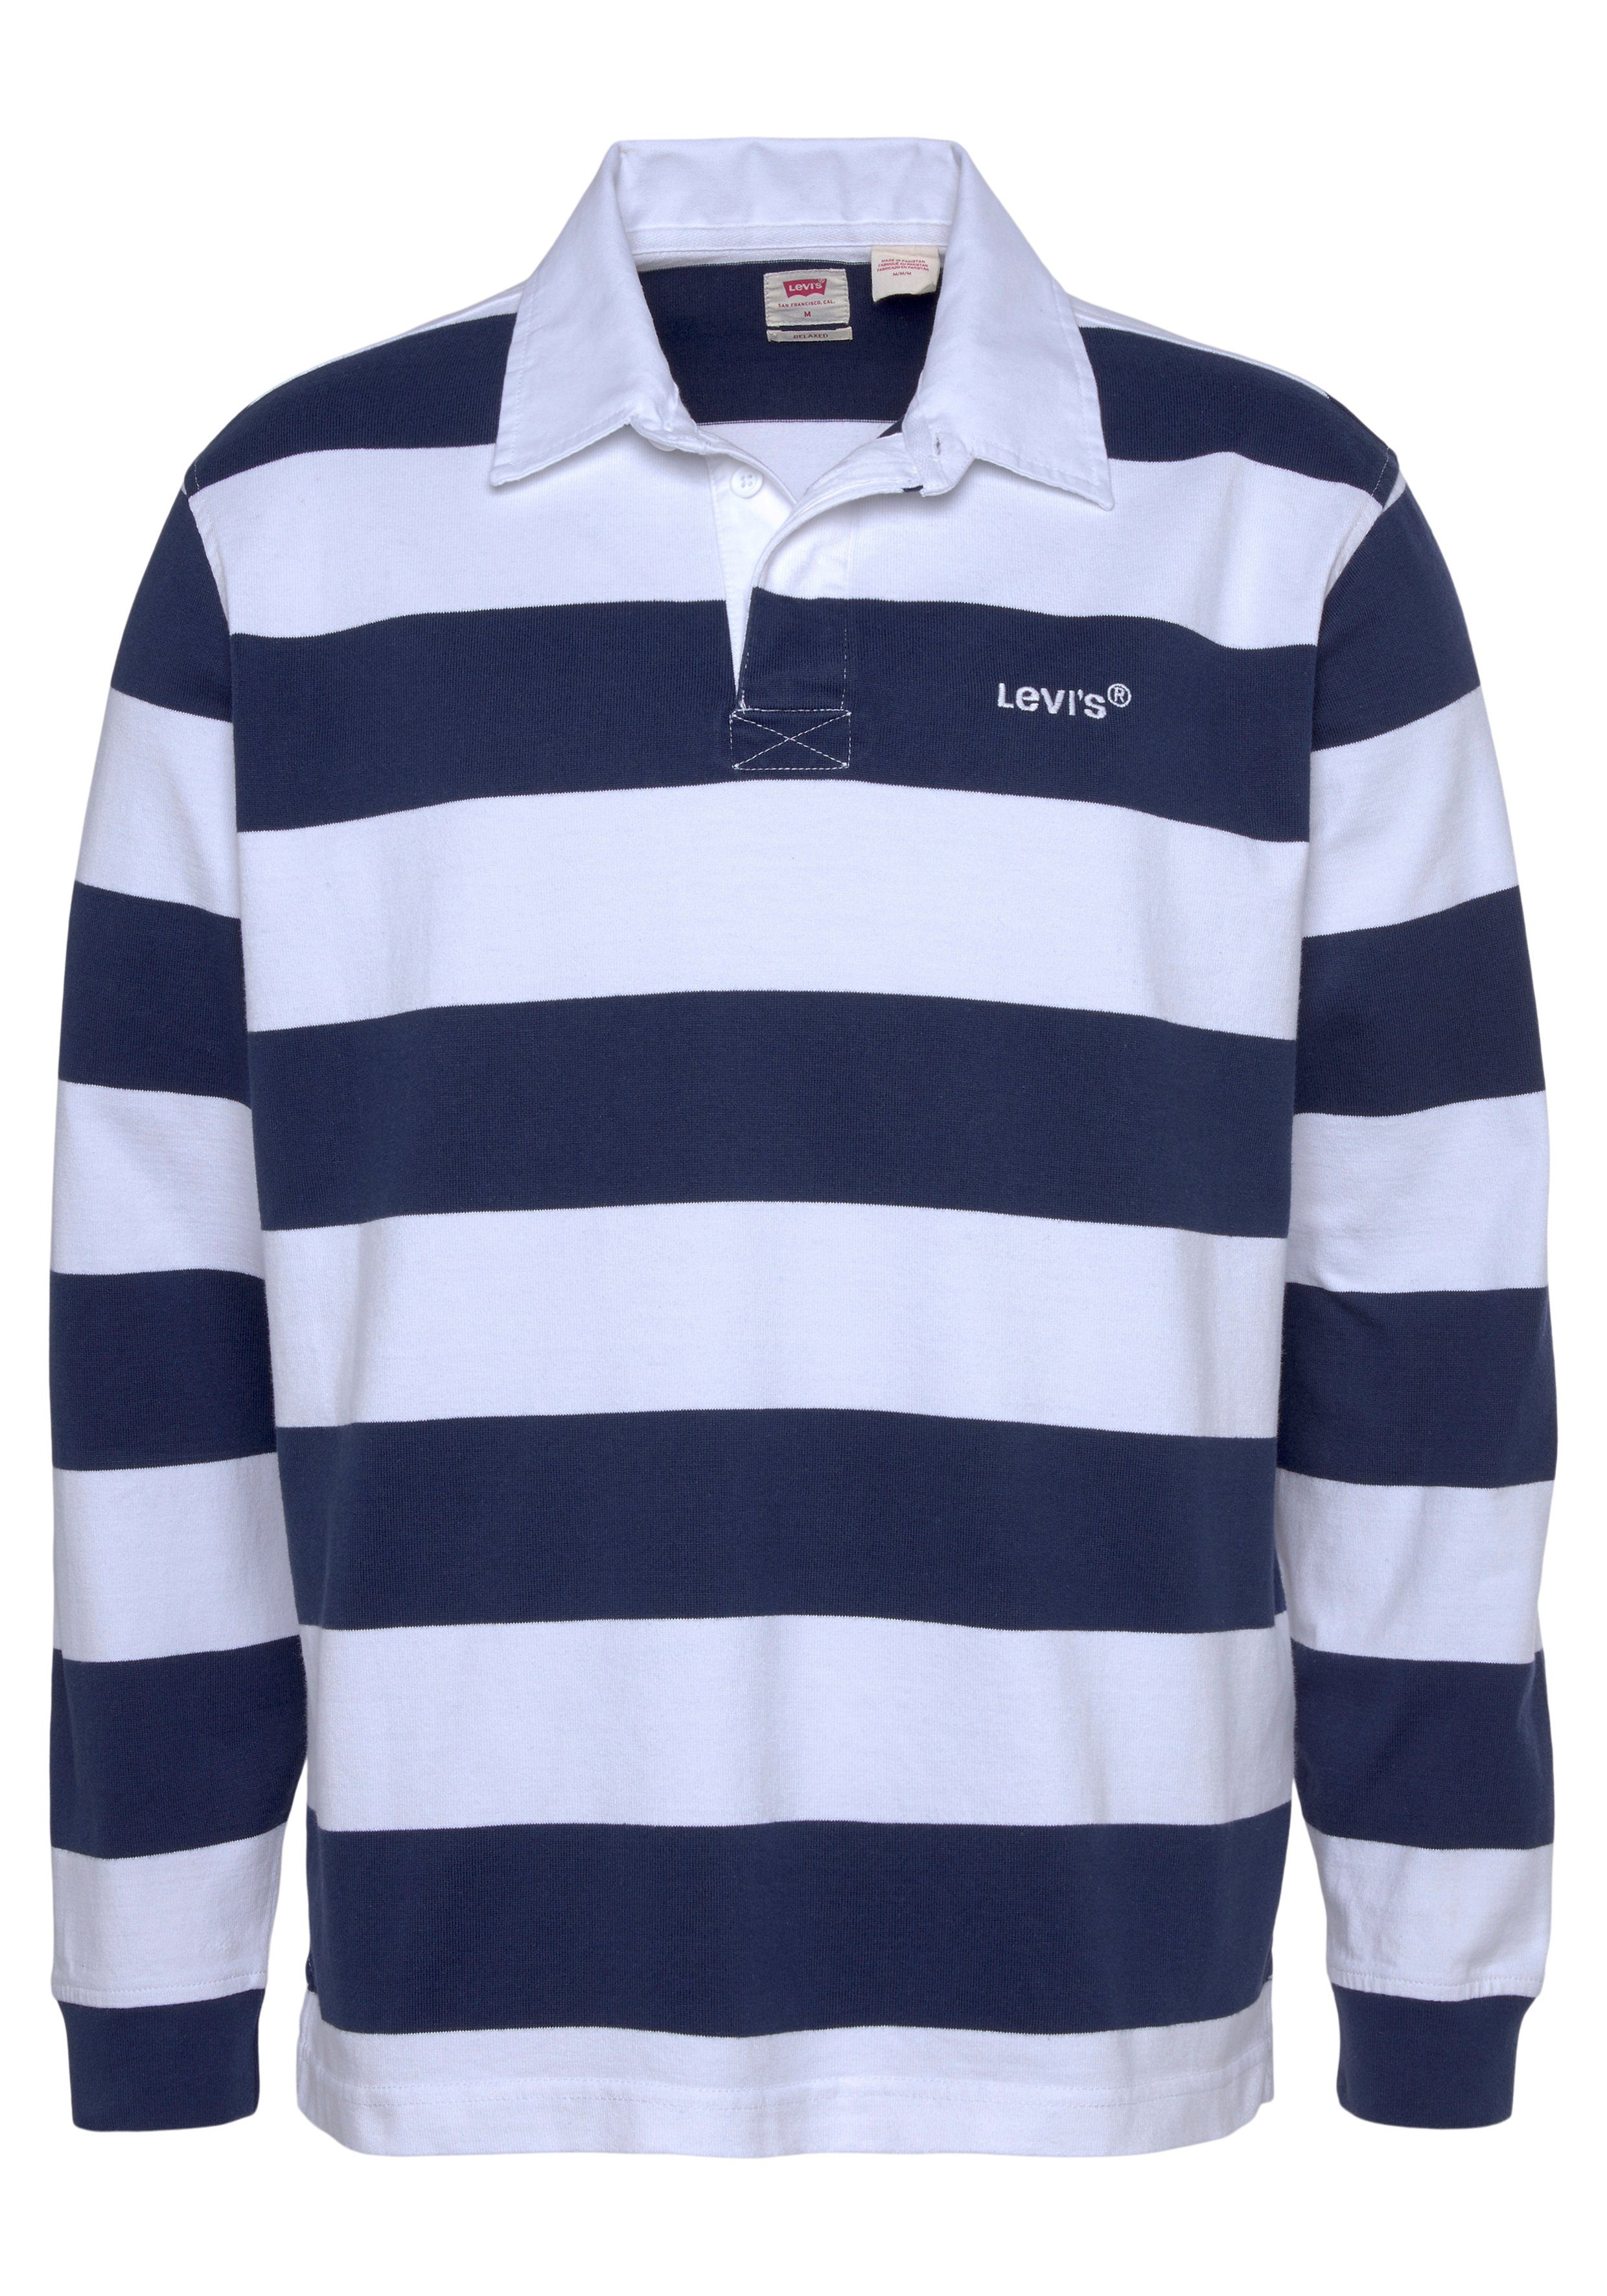 Levi's® Langarm-Poloshirt UNION RUGBY MUL-COL multi-color | Poloshirts